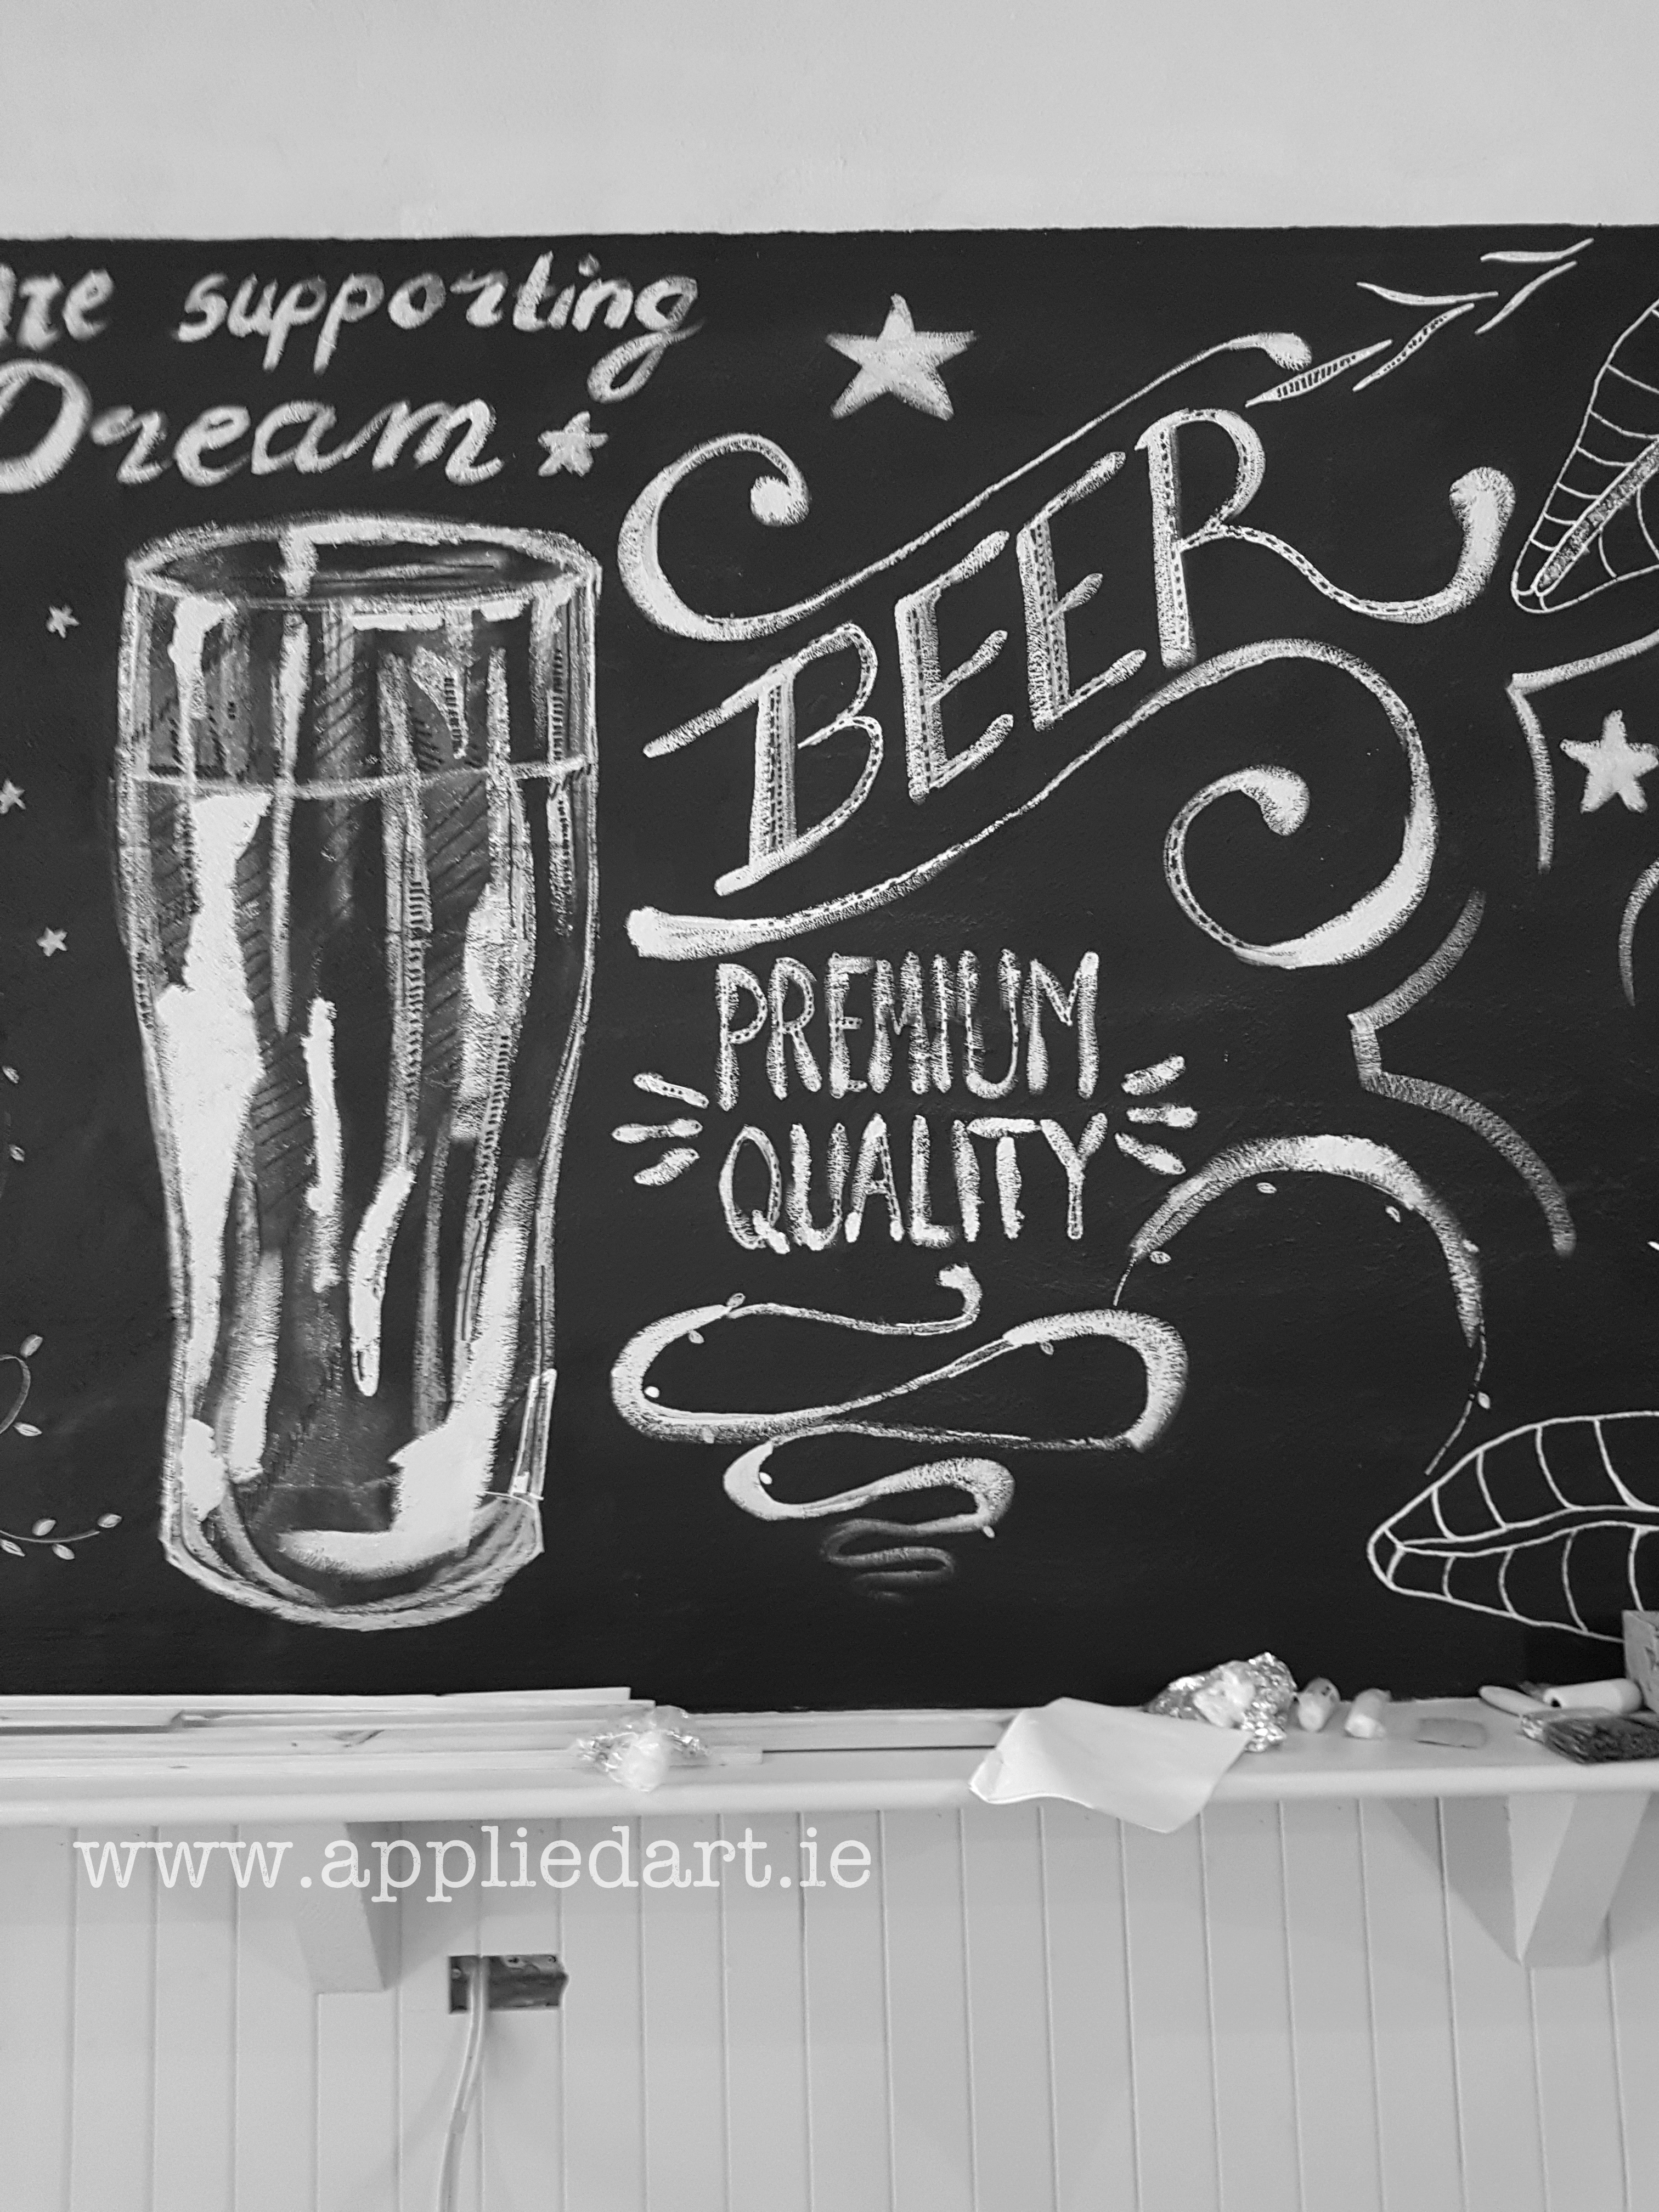 aKlaudia Byrne Applied Art chalk art cafe nwetown mount kennedy irish artist chalk board commercial art painting chalk branding ireland (54).jpg